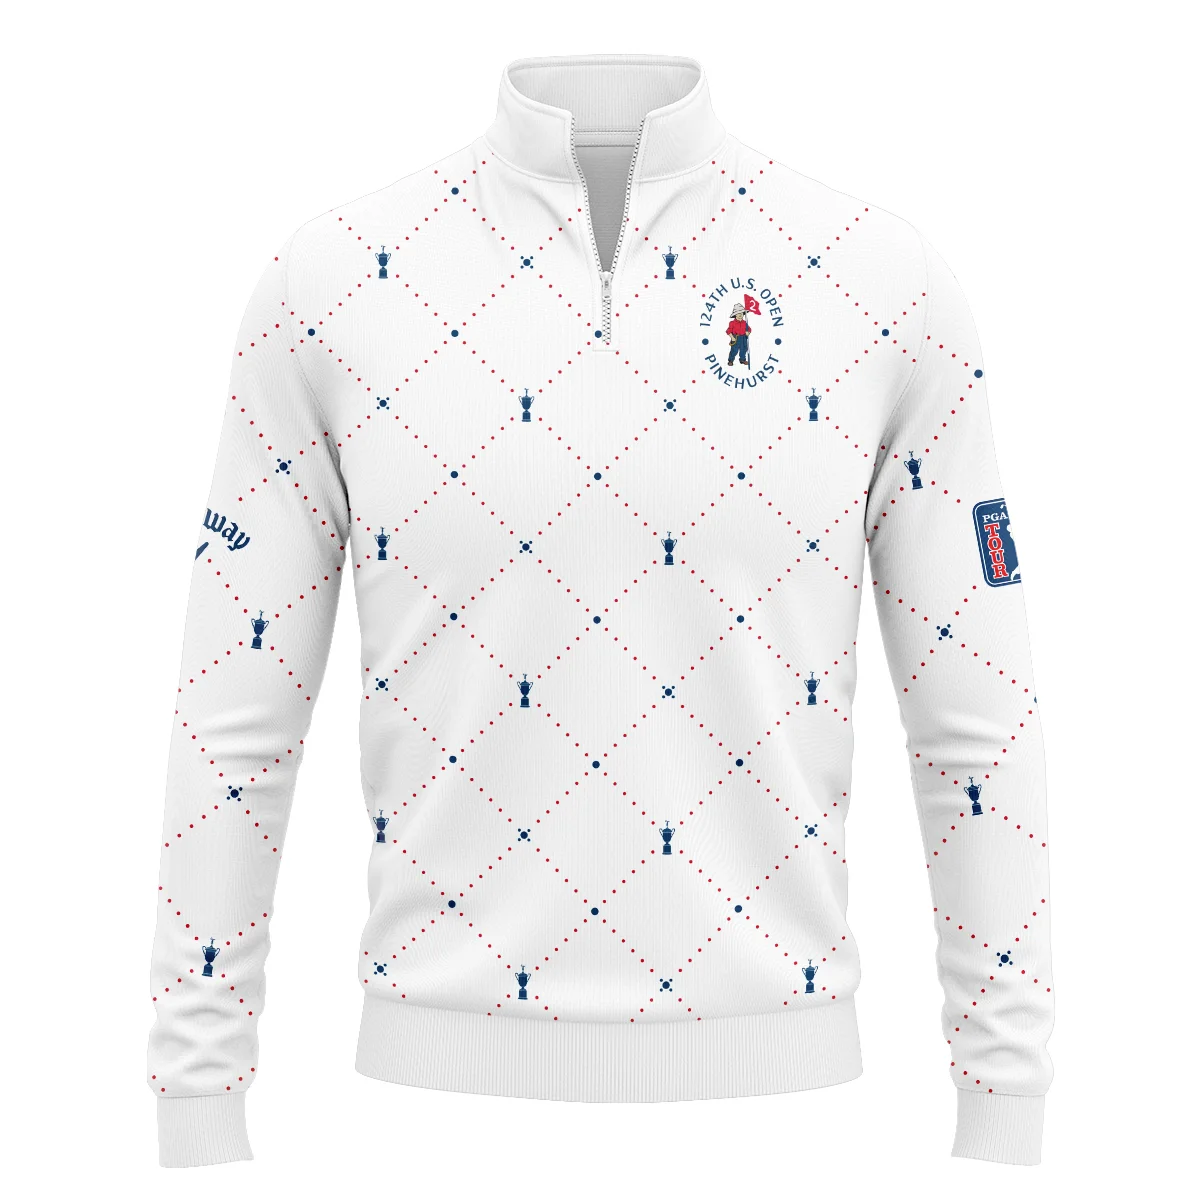 Argyle Pattern With Cup 124th U.S. Open Pinehurst Callaway Unisex Sweatshirt Style Classic Sweatshirt